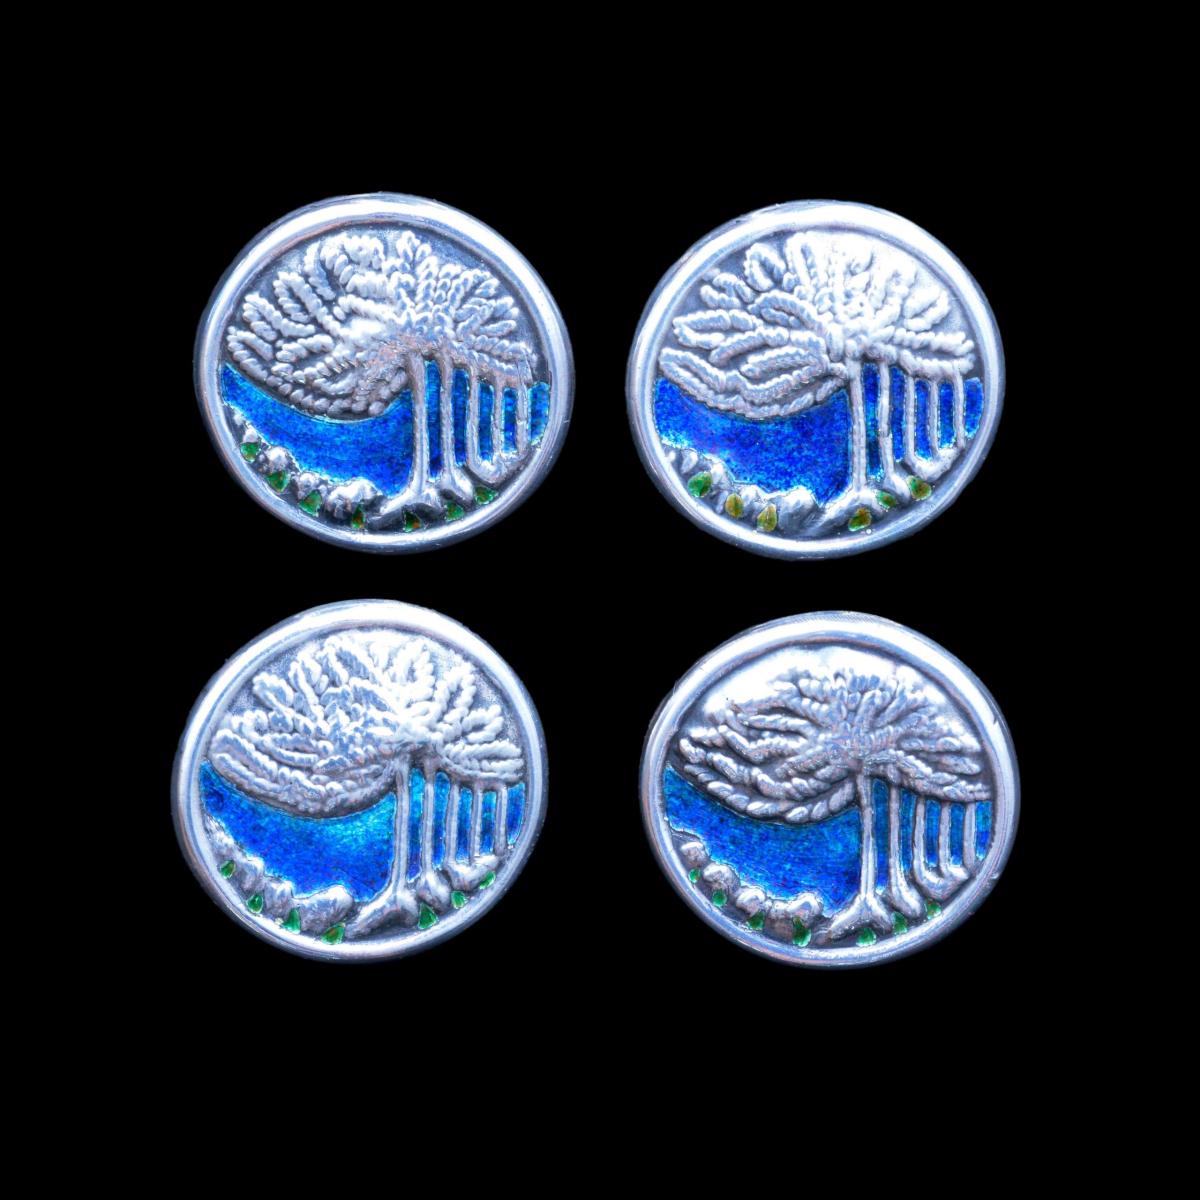 Liberty Cymric silver buttons